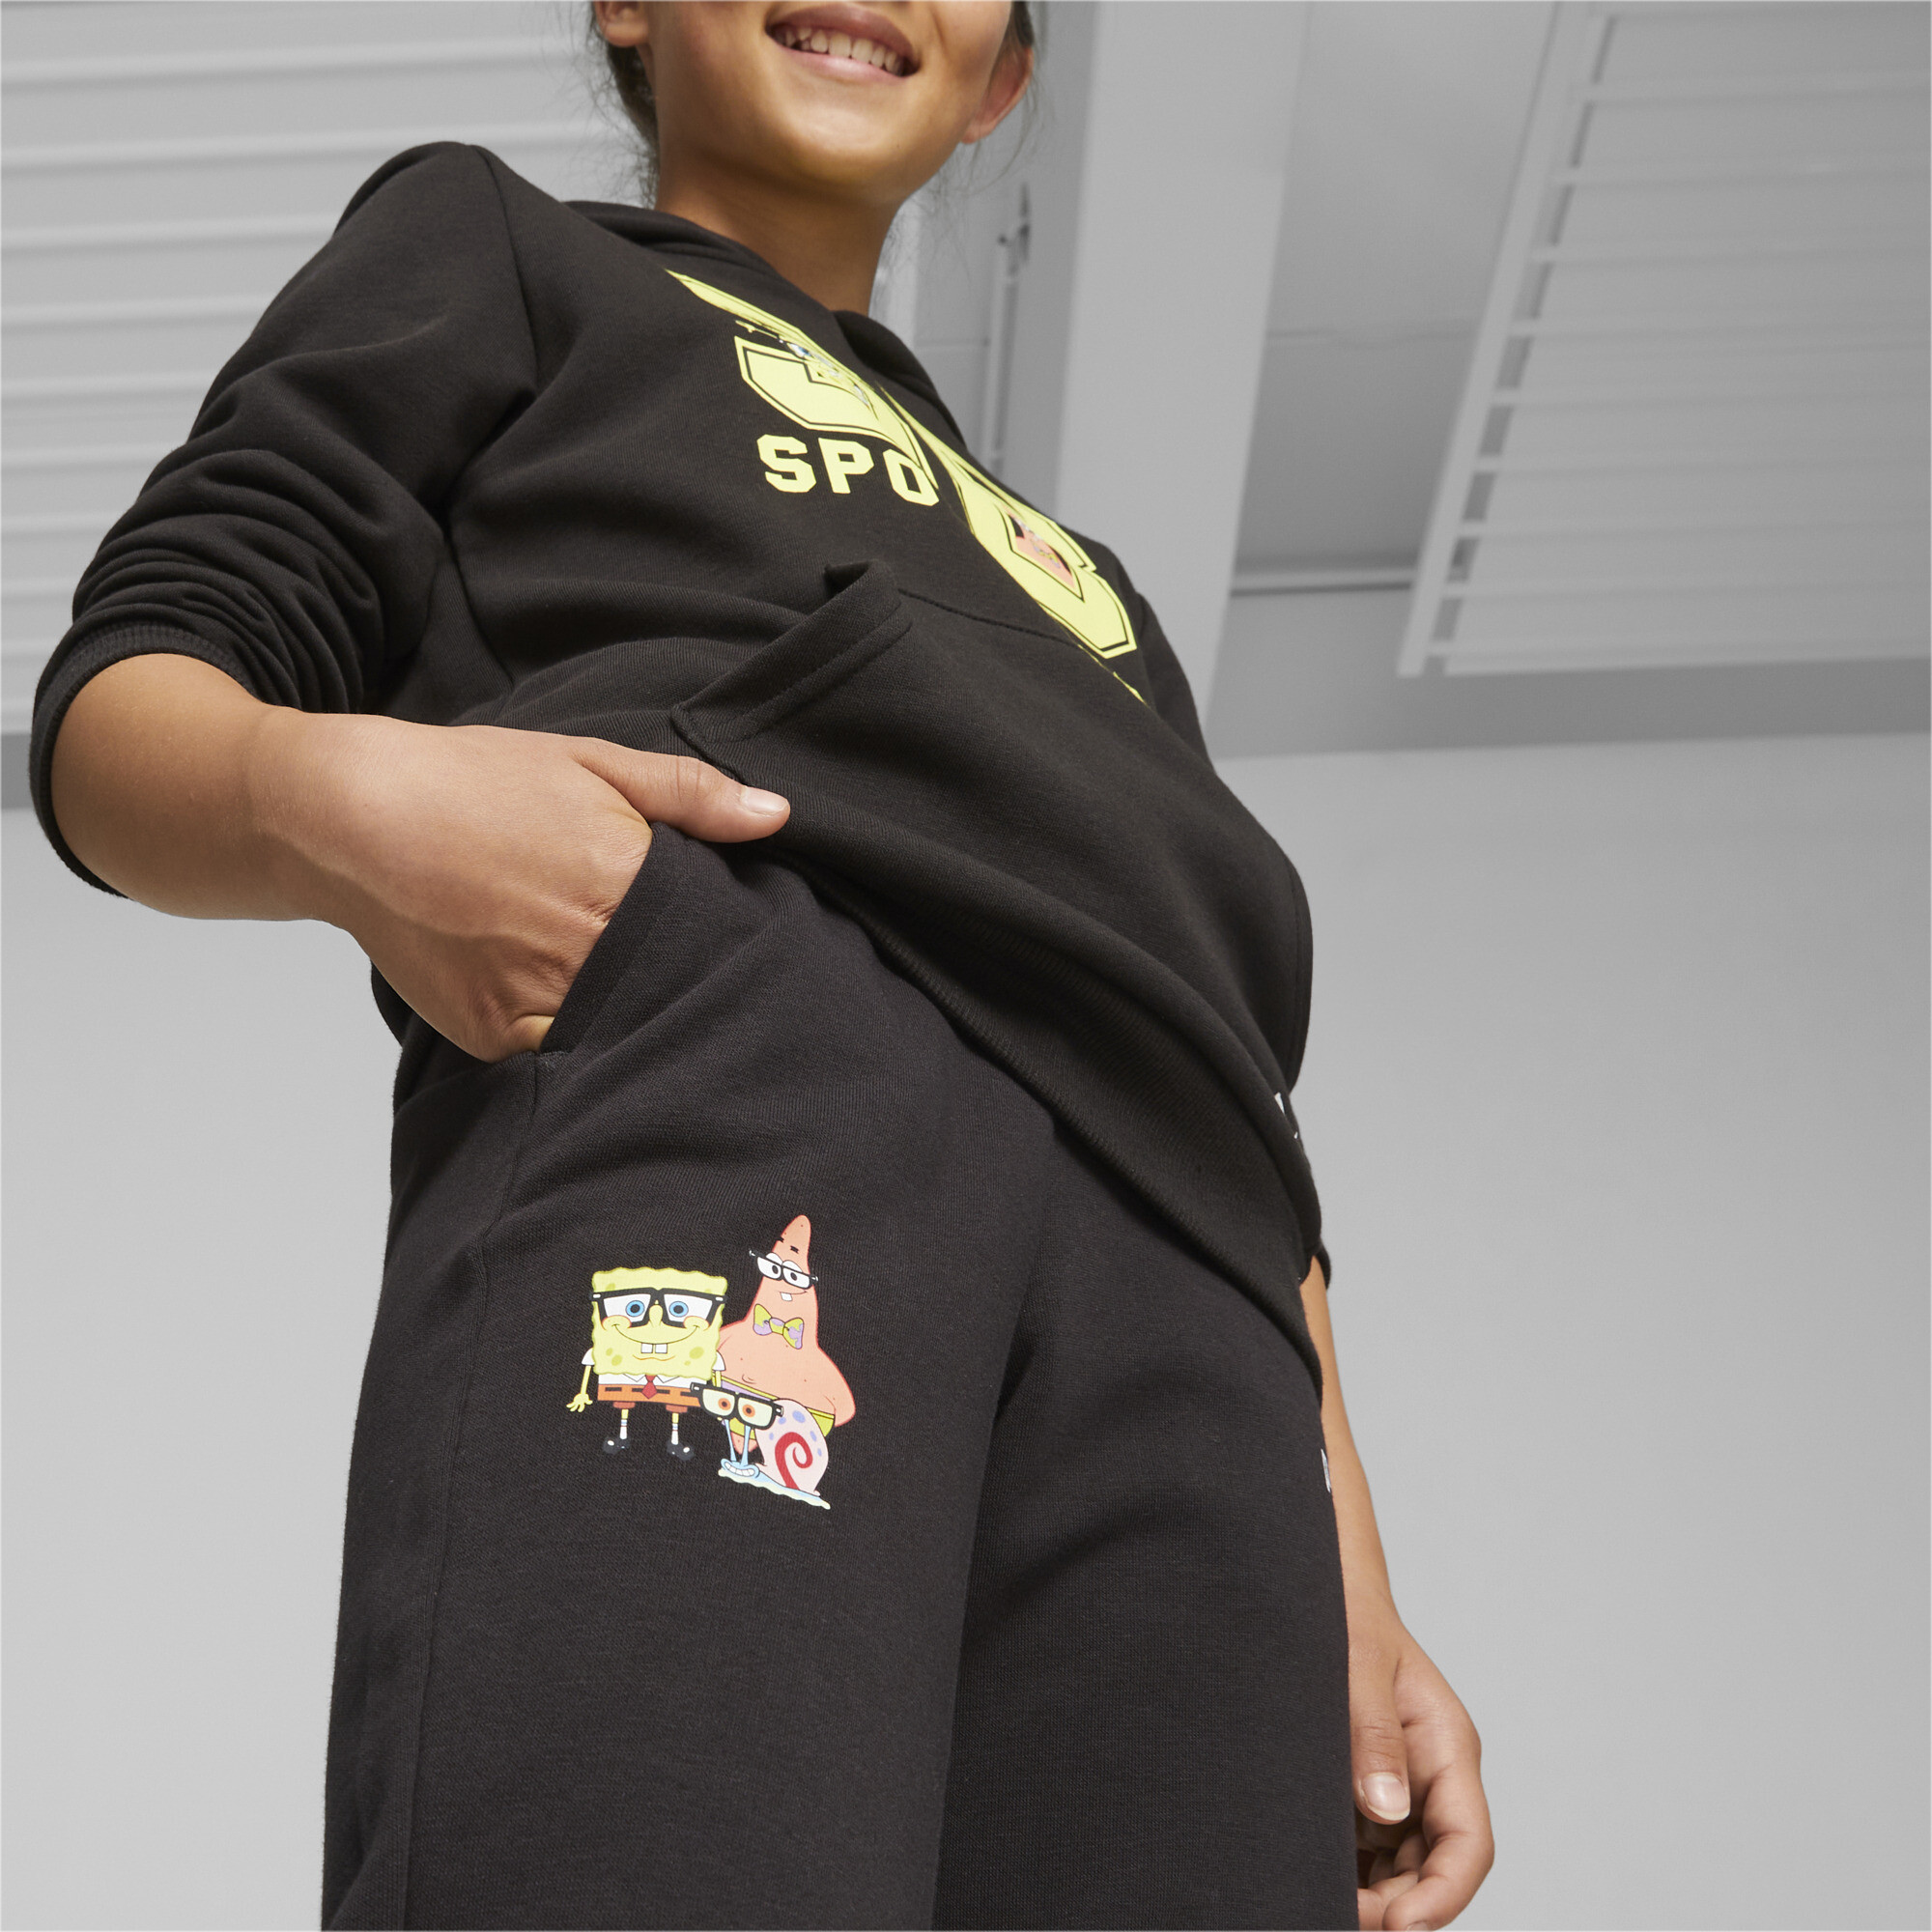 PUMA X SPONGEBOB SQUAREPANTS Sweatpants In Black, Size 13-14 Youth